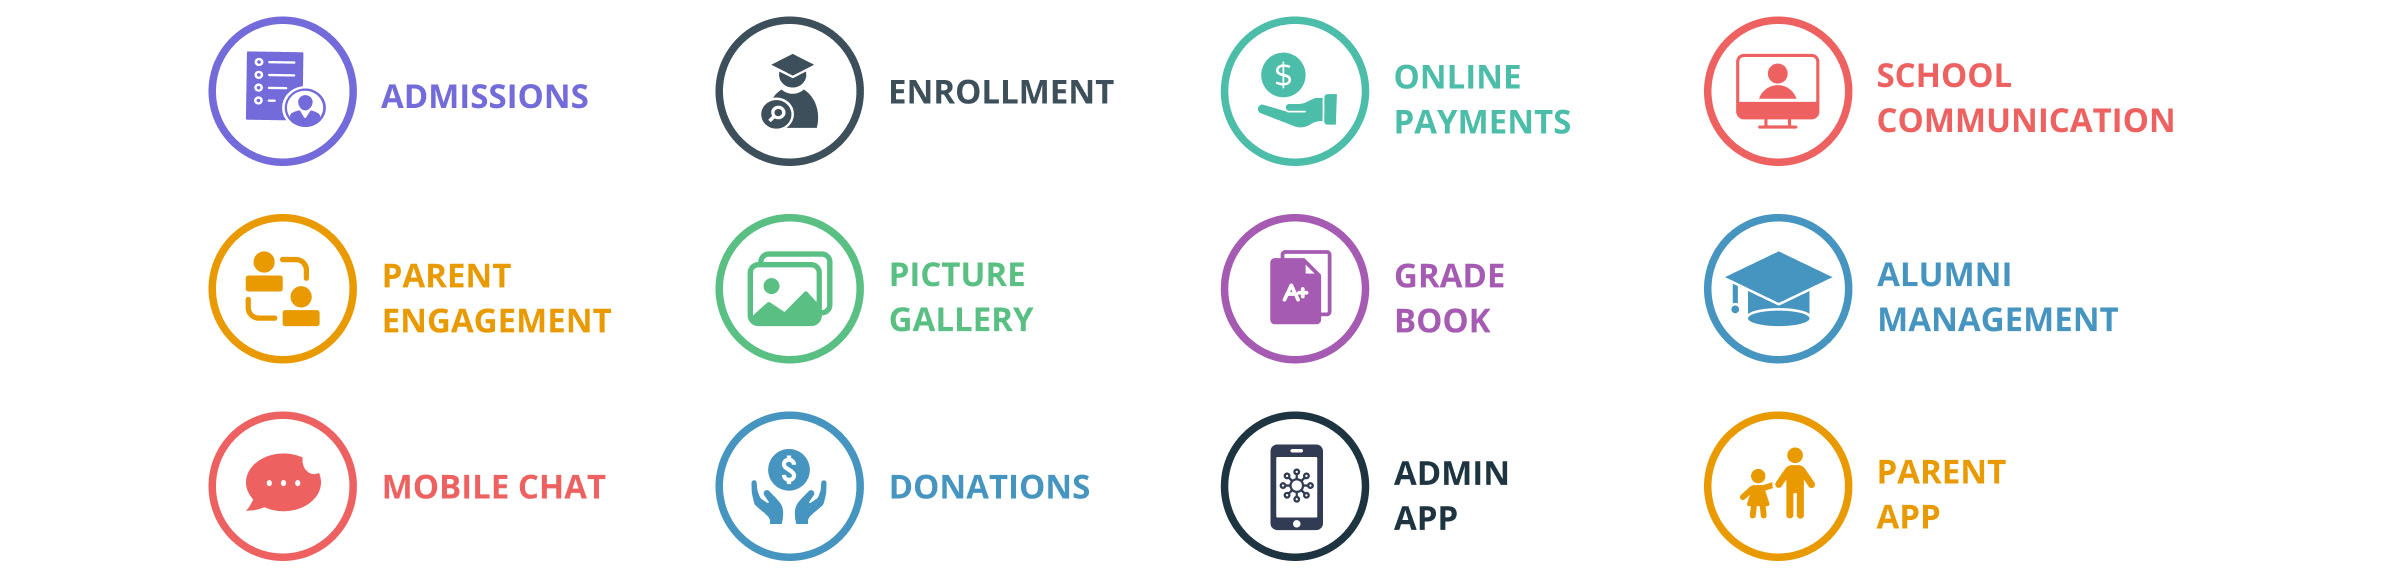 Communication engagement admission enrollment student information system online payment